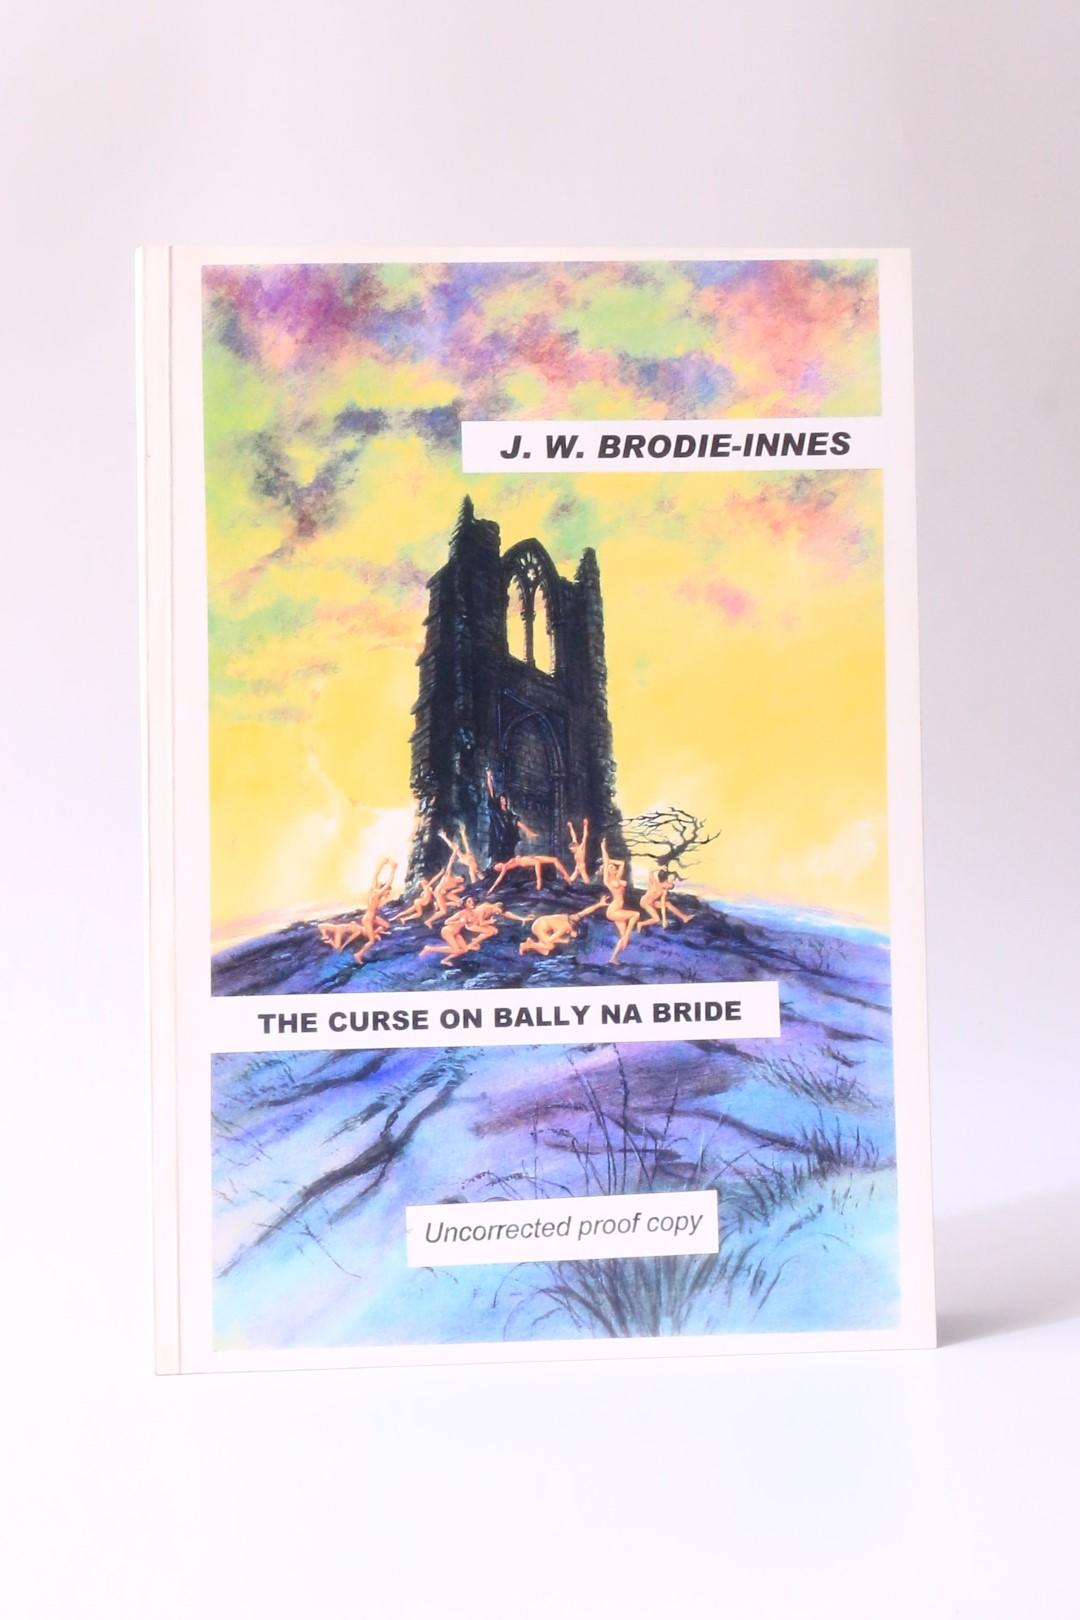 J.W. Brodie-Innes - The Curse on Bally Na Bride - Lamorna: Cove Press, 2003, Proof.